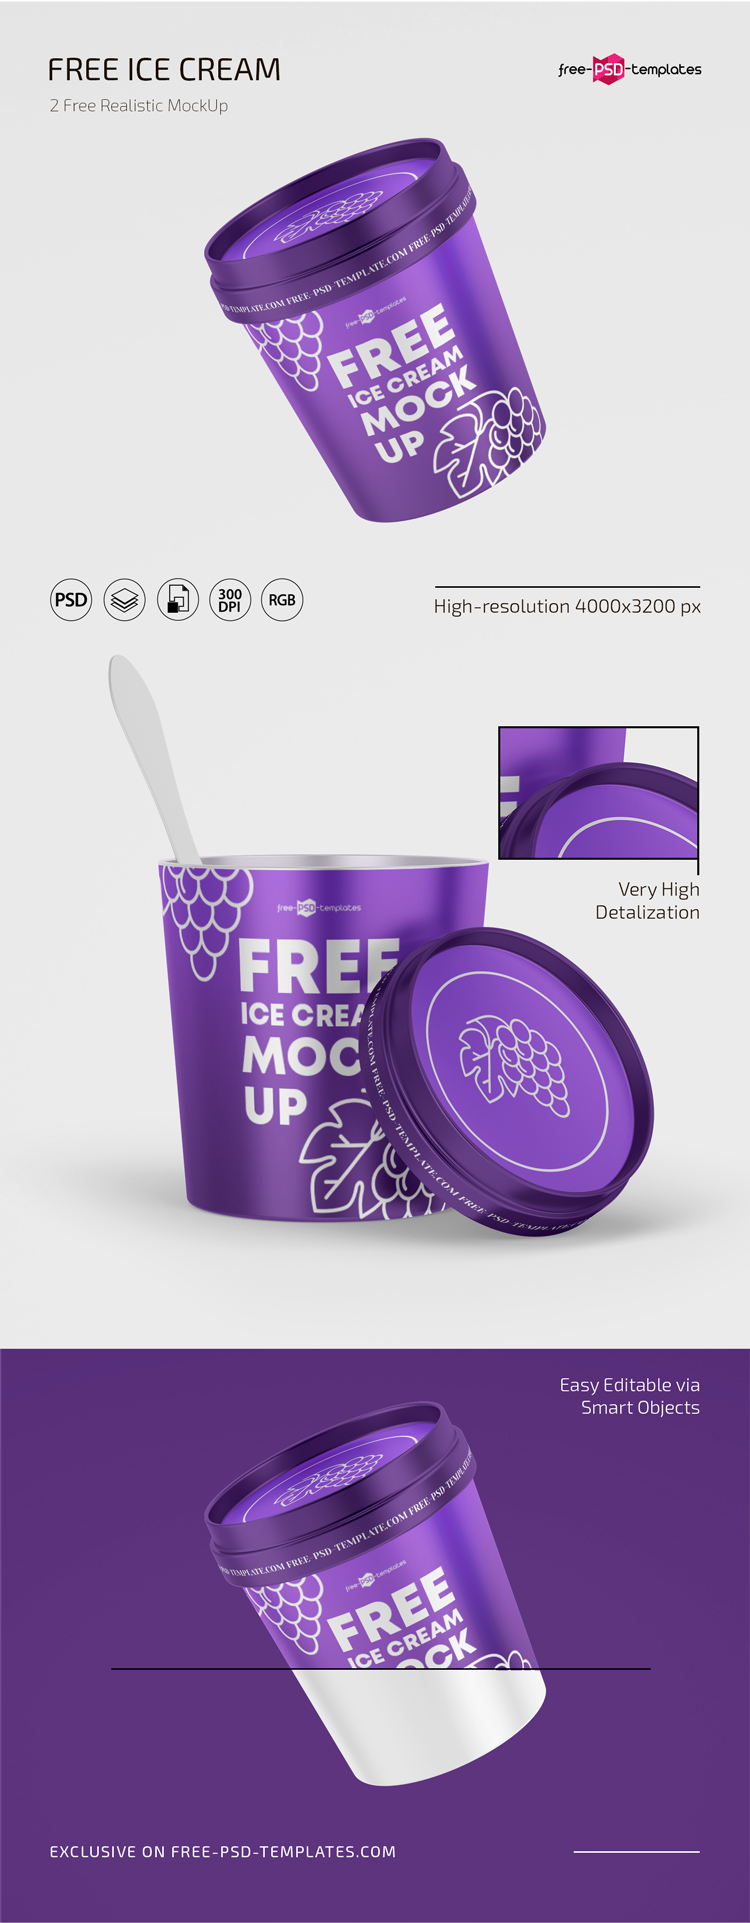 Download Free Psd Ice Cream Plastic Jar Mockup Free Psd Templates